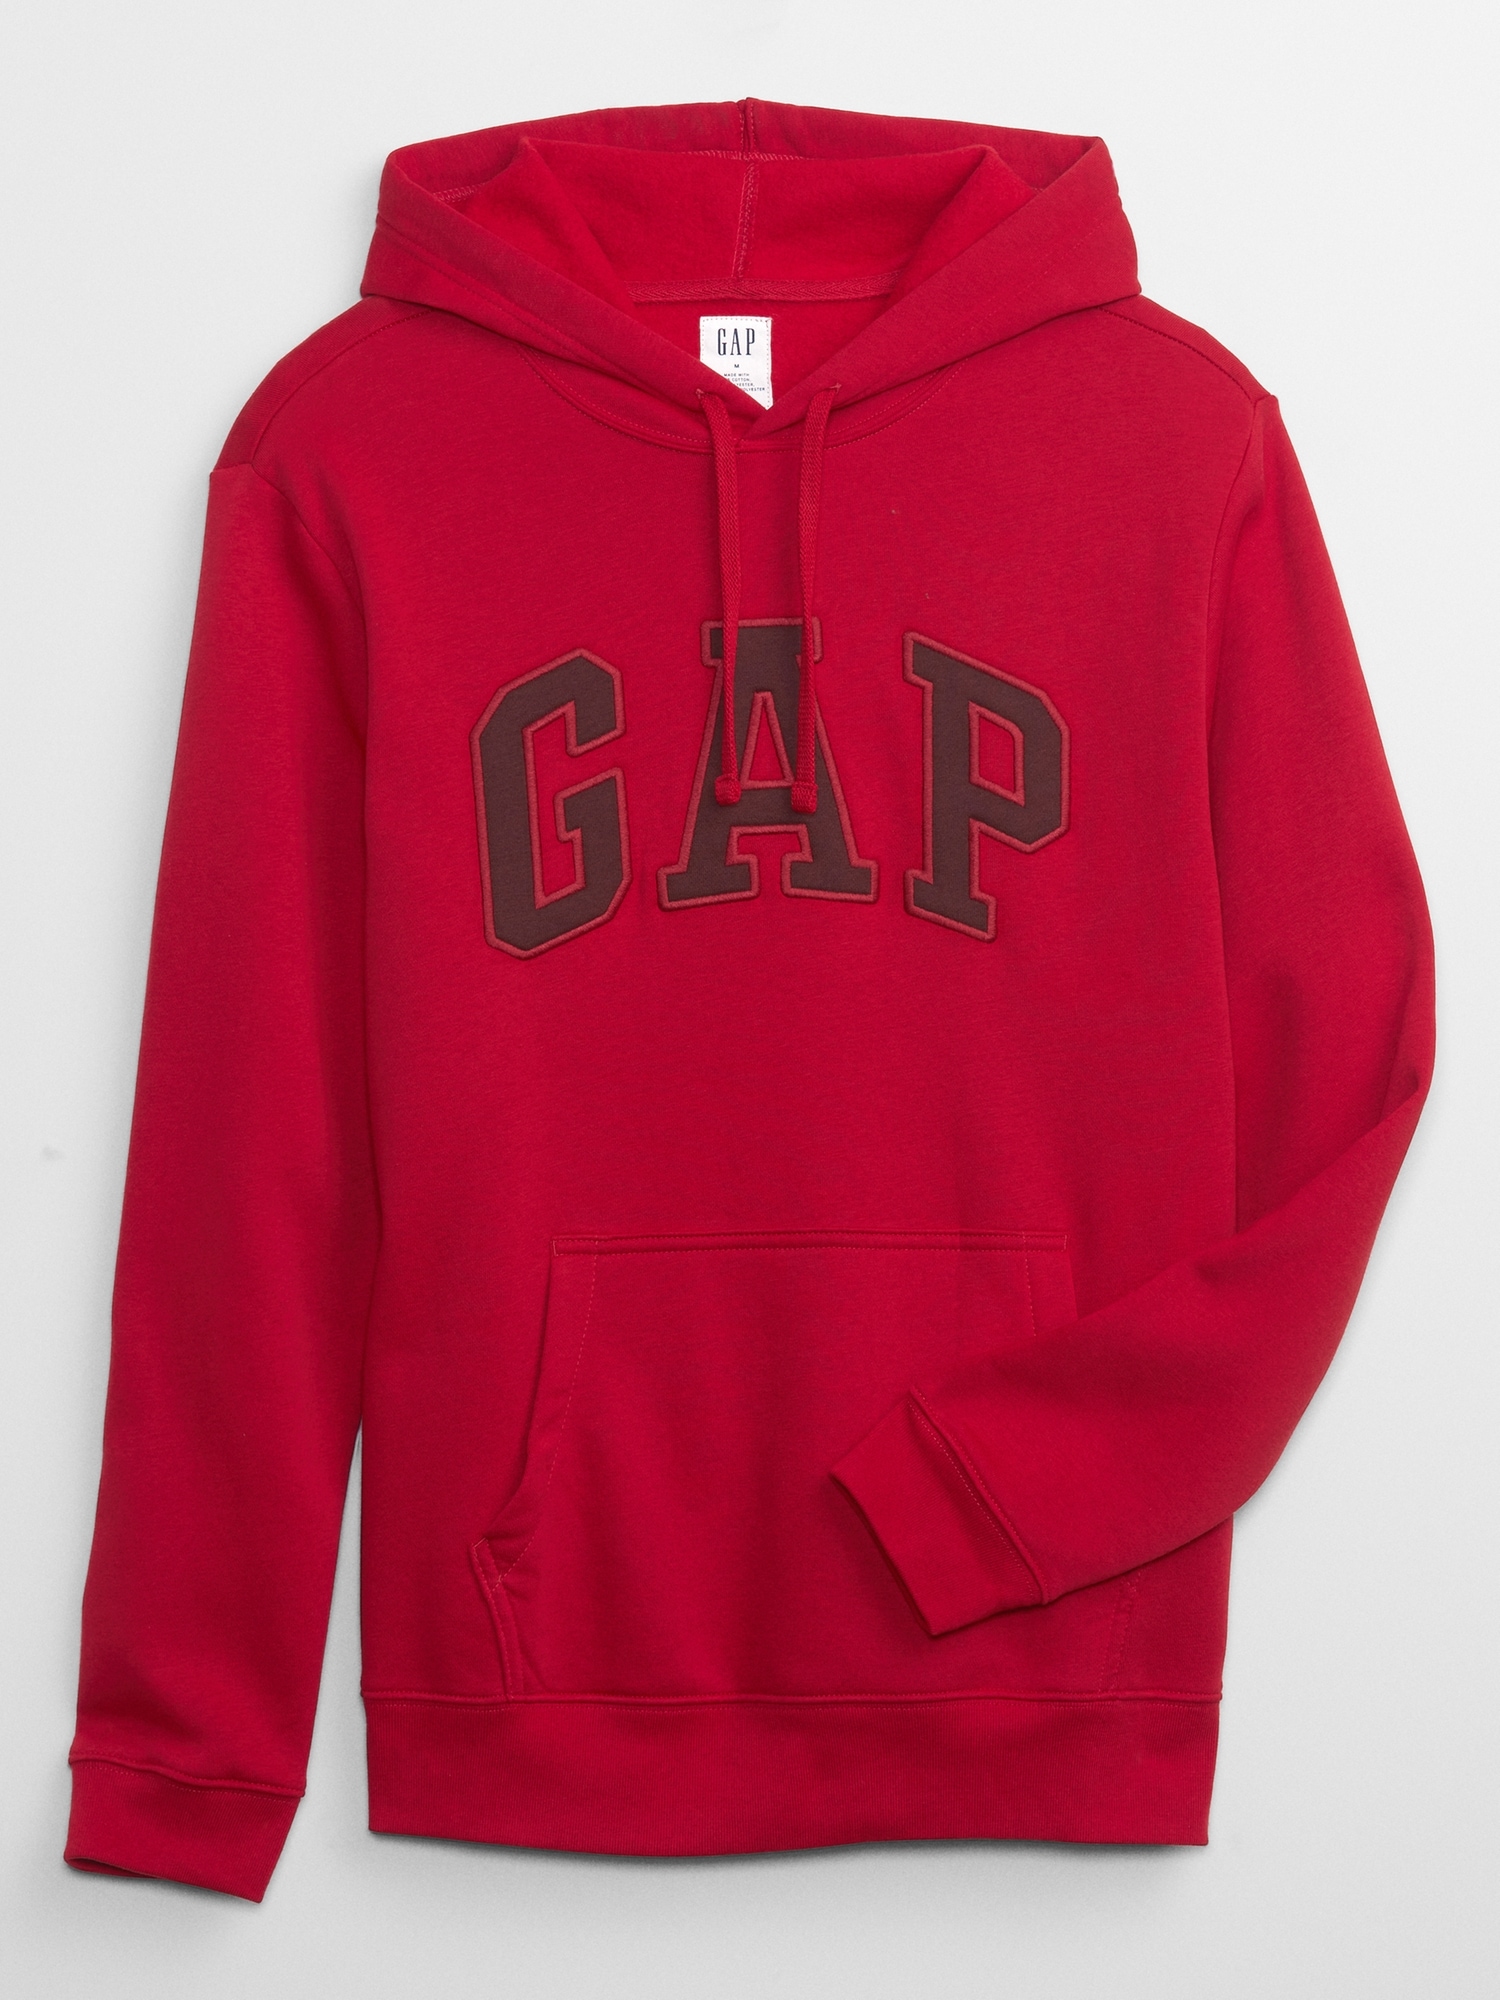 Gap Logo Fleece Hoodie | Gap